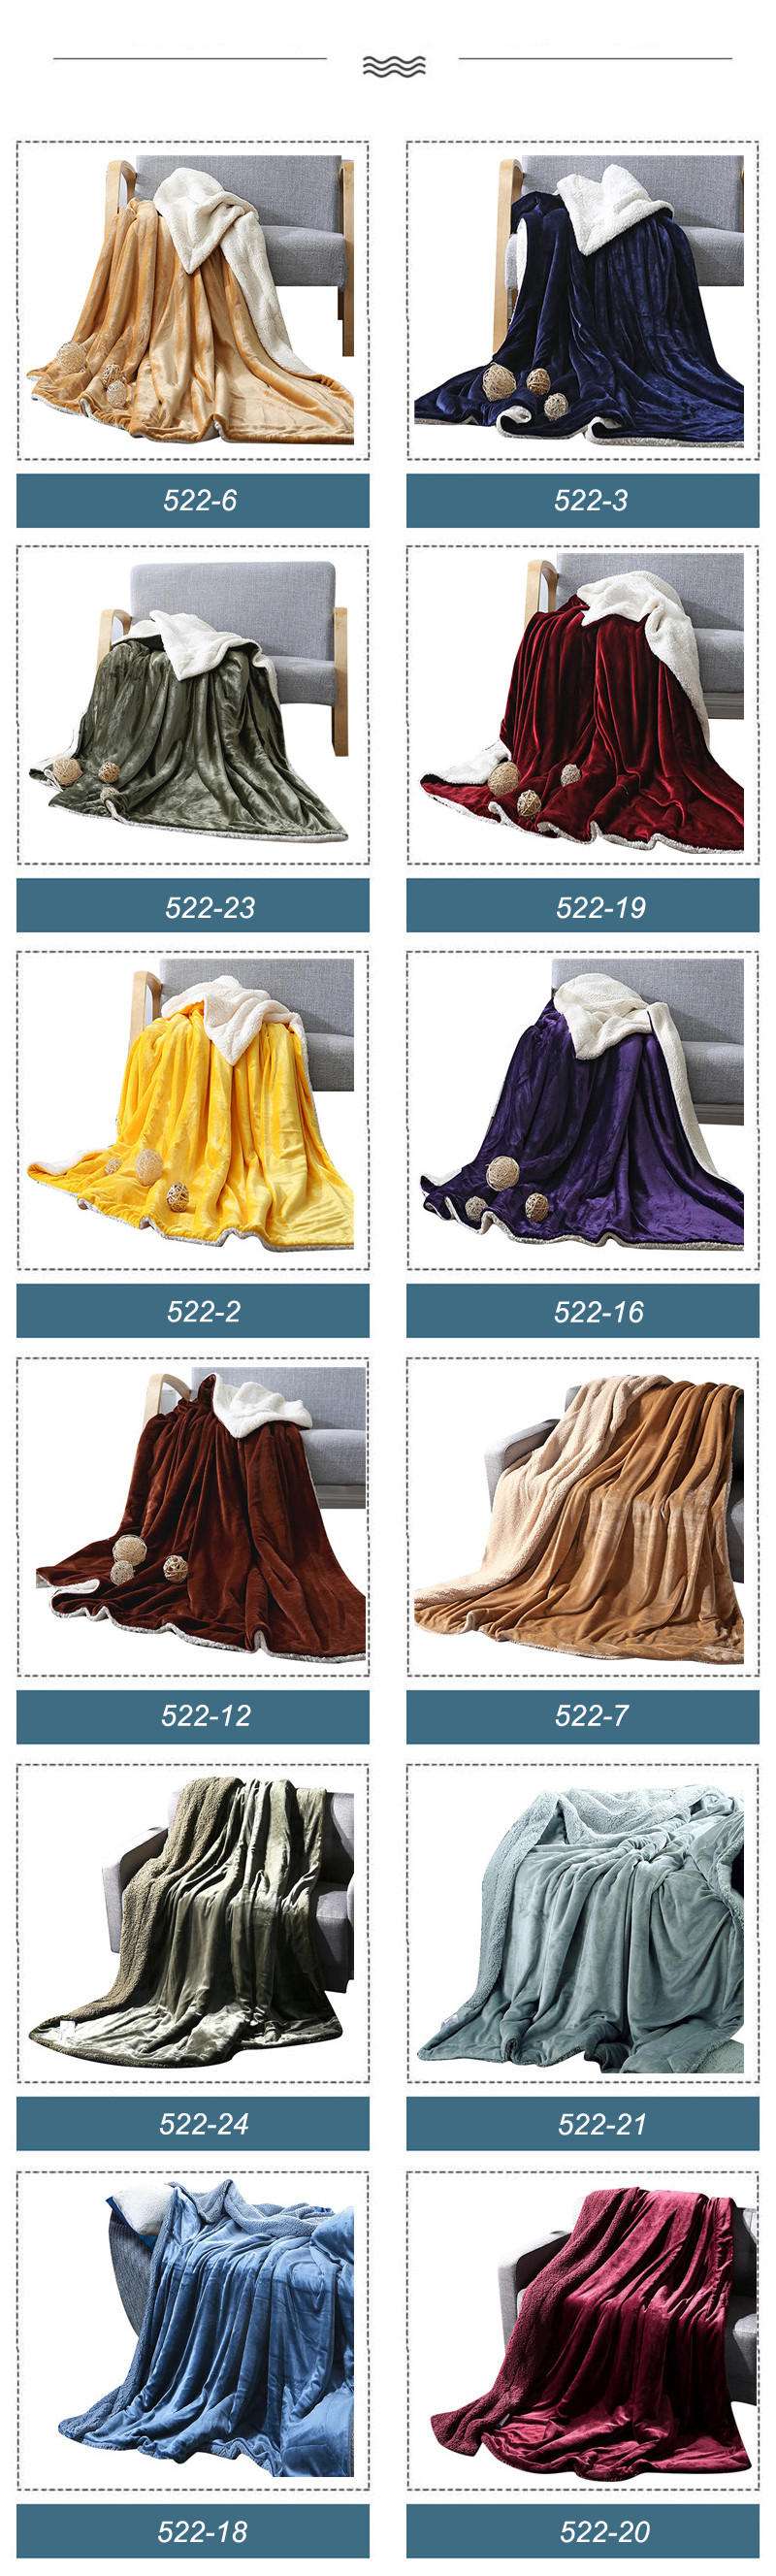 For King Bed Coral Blanket Fleece